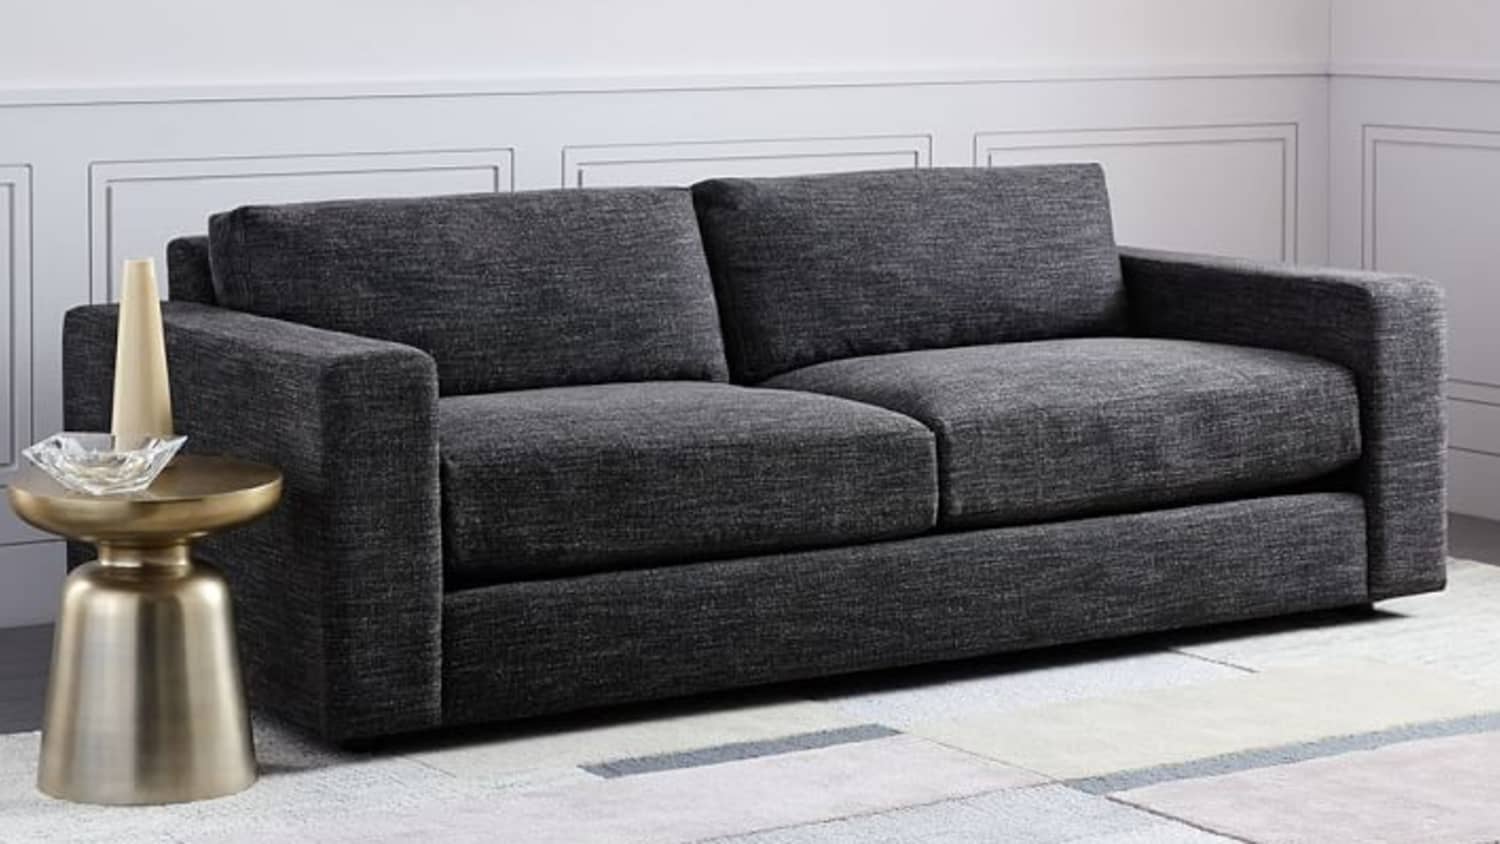 Transform Your Living Room with a Chic West Elm Sofa Sleeper缩略图